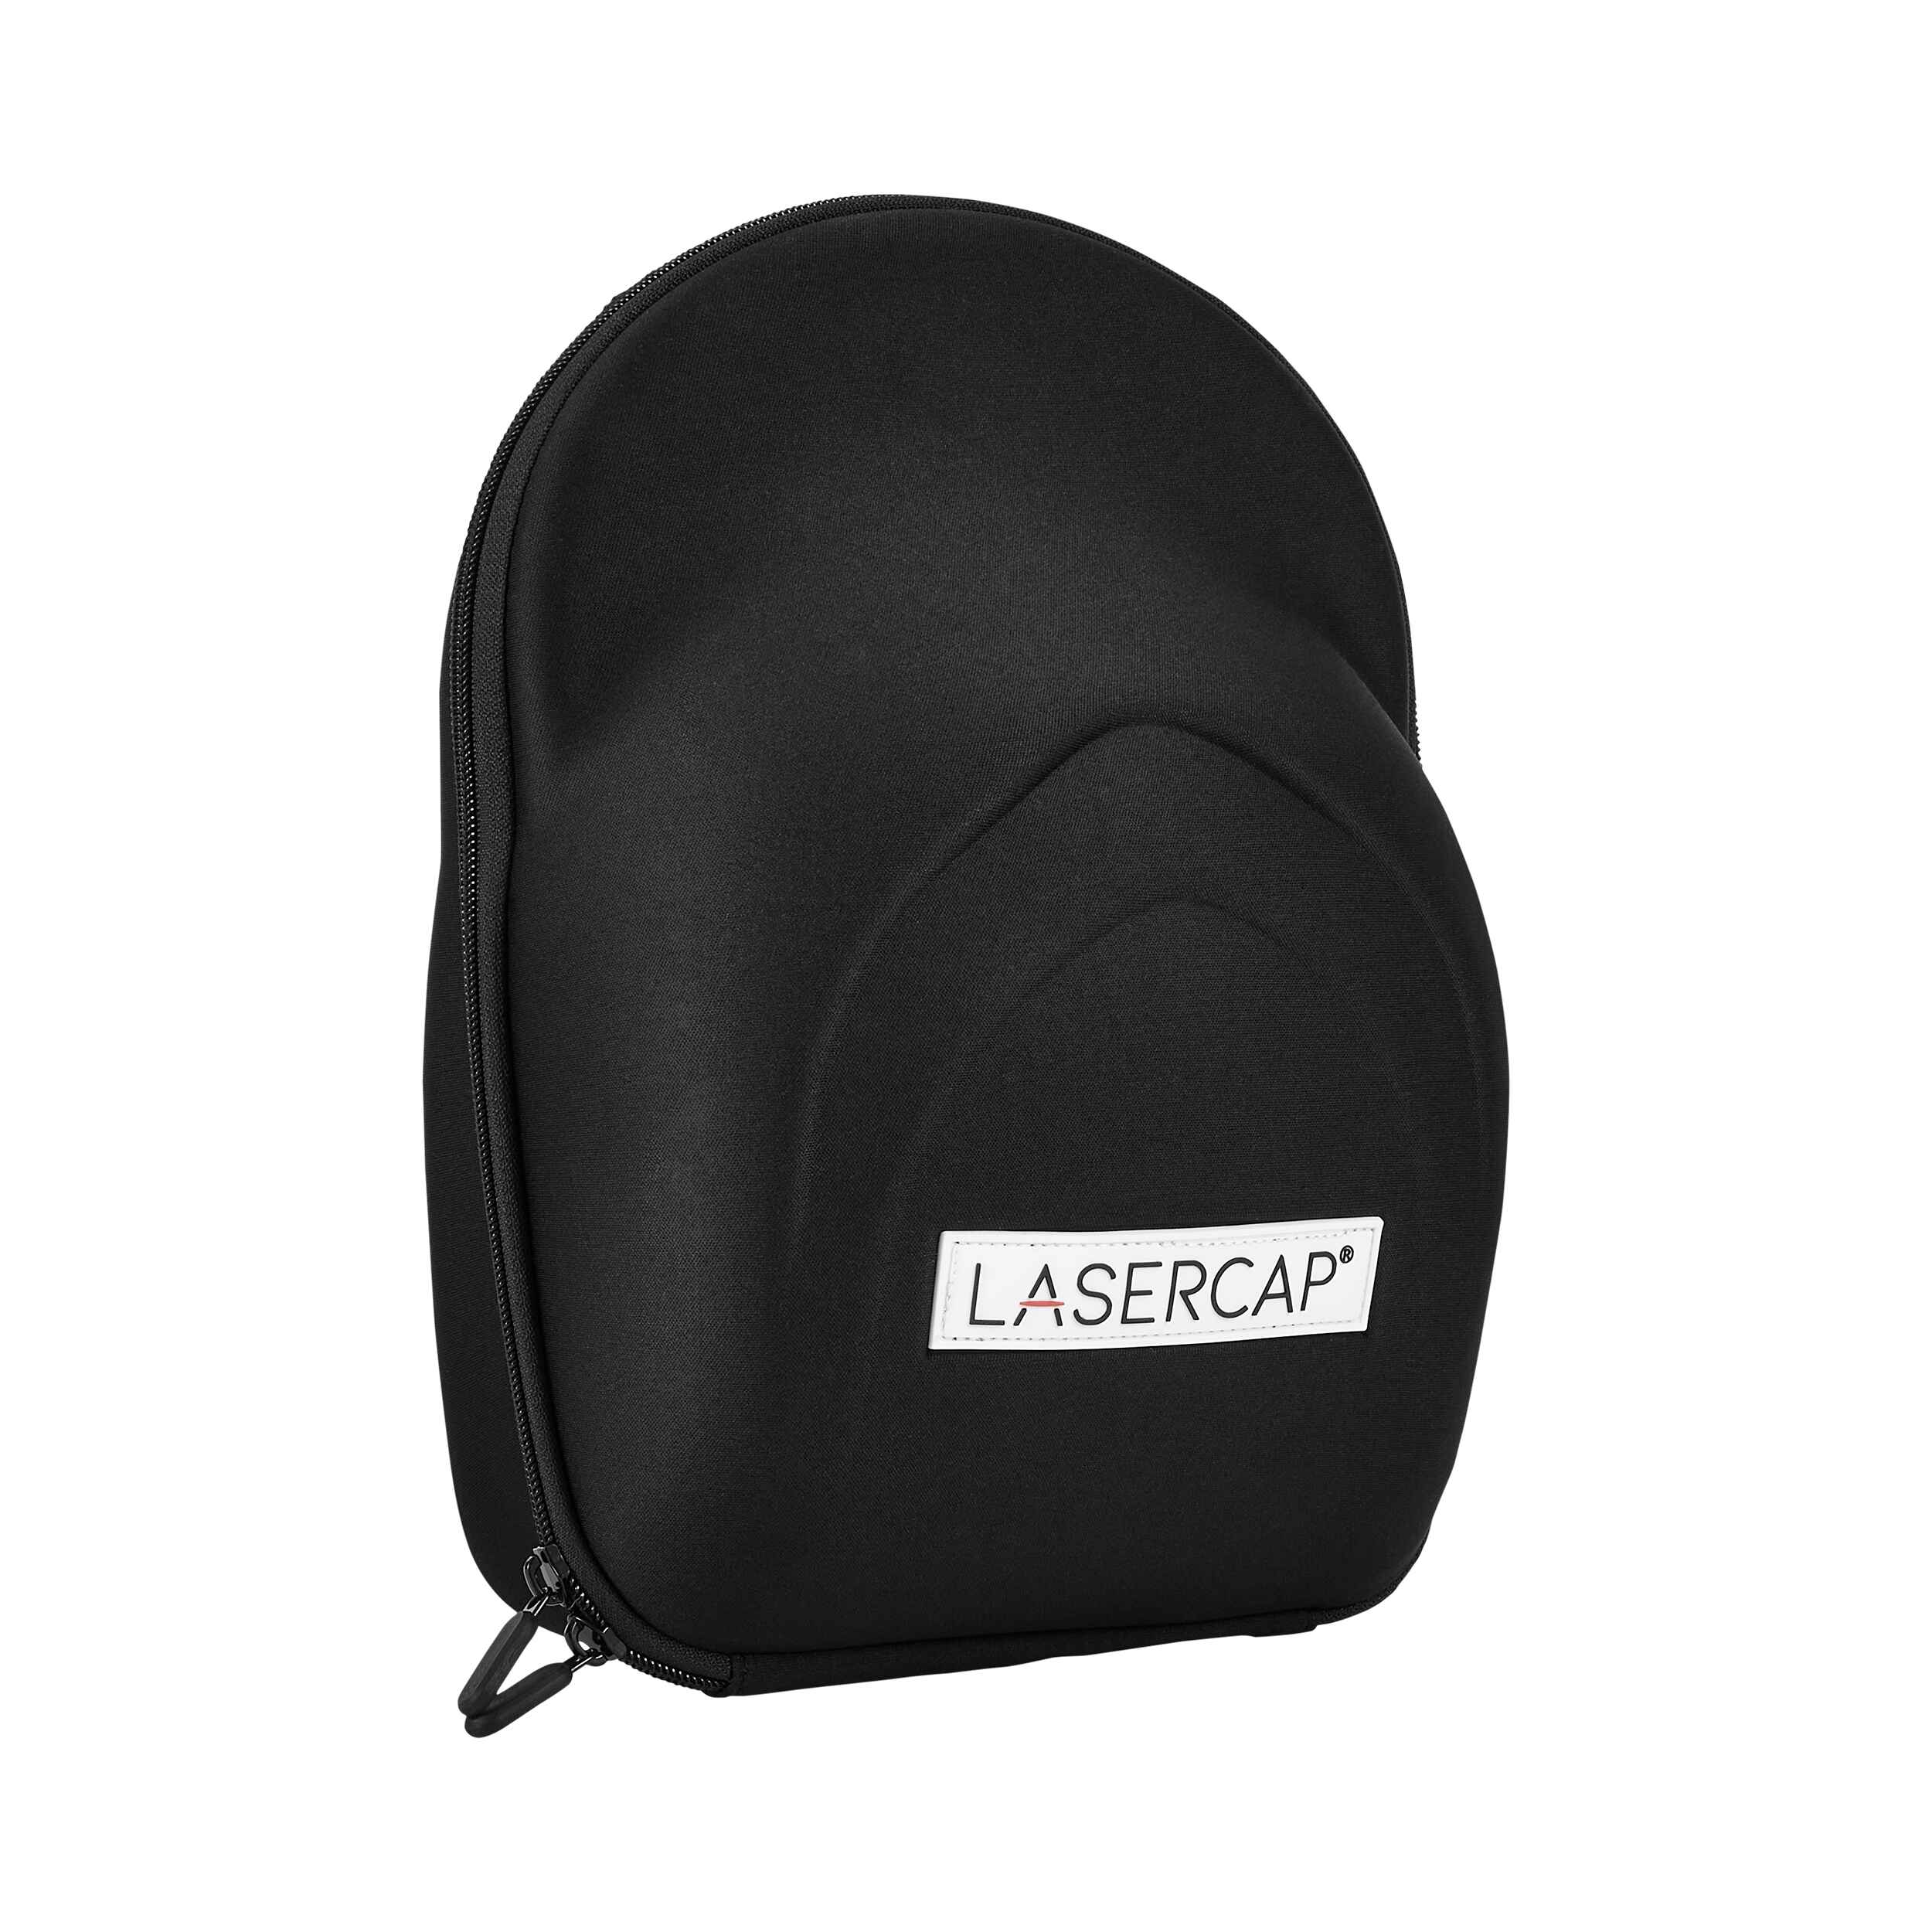 LaserCap black foam carrying case